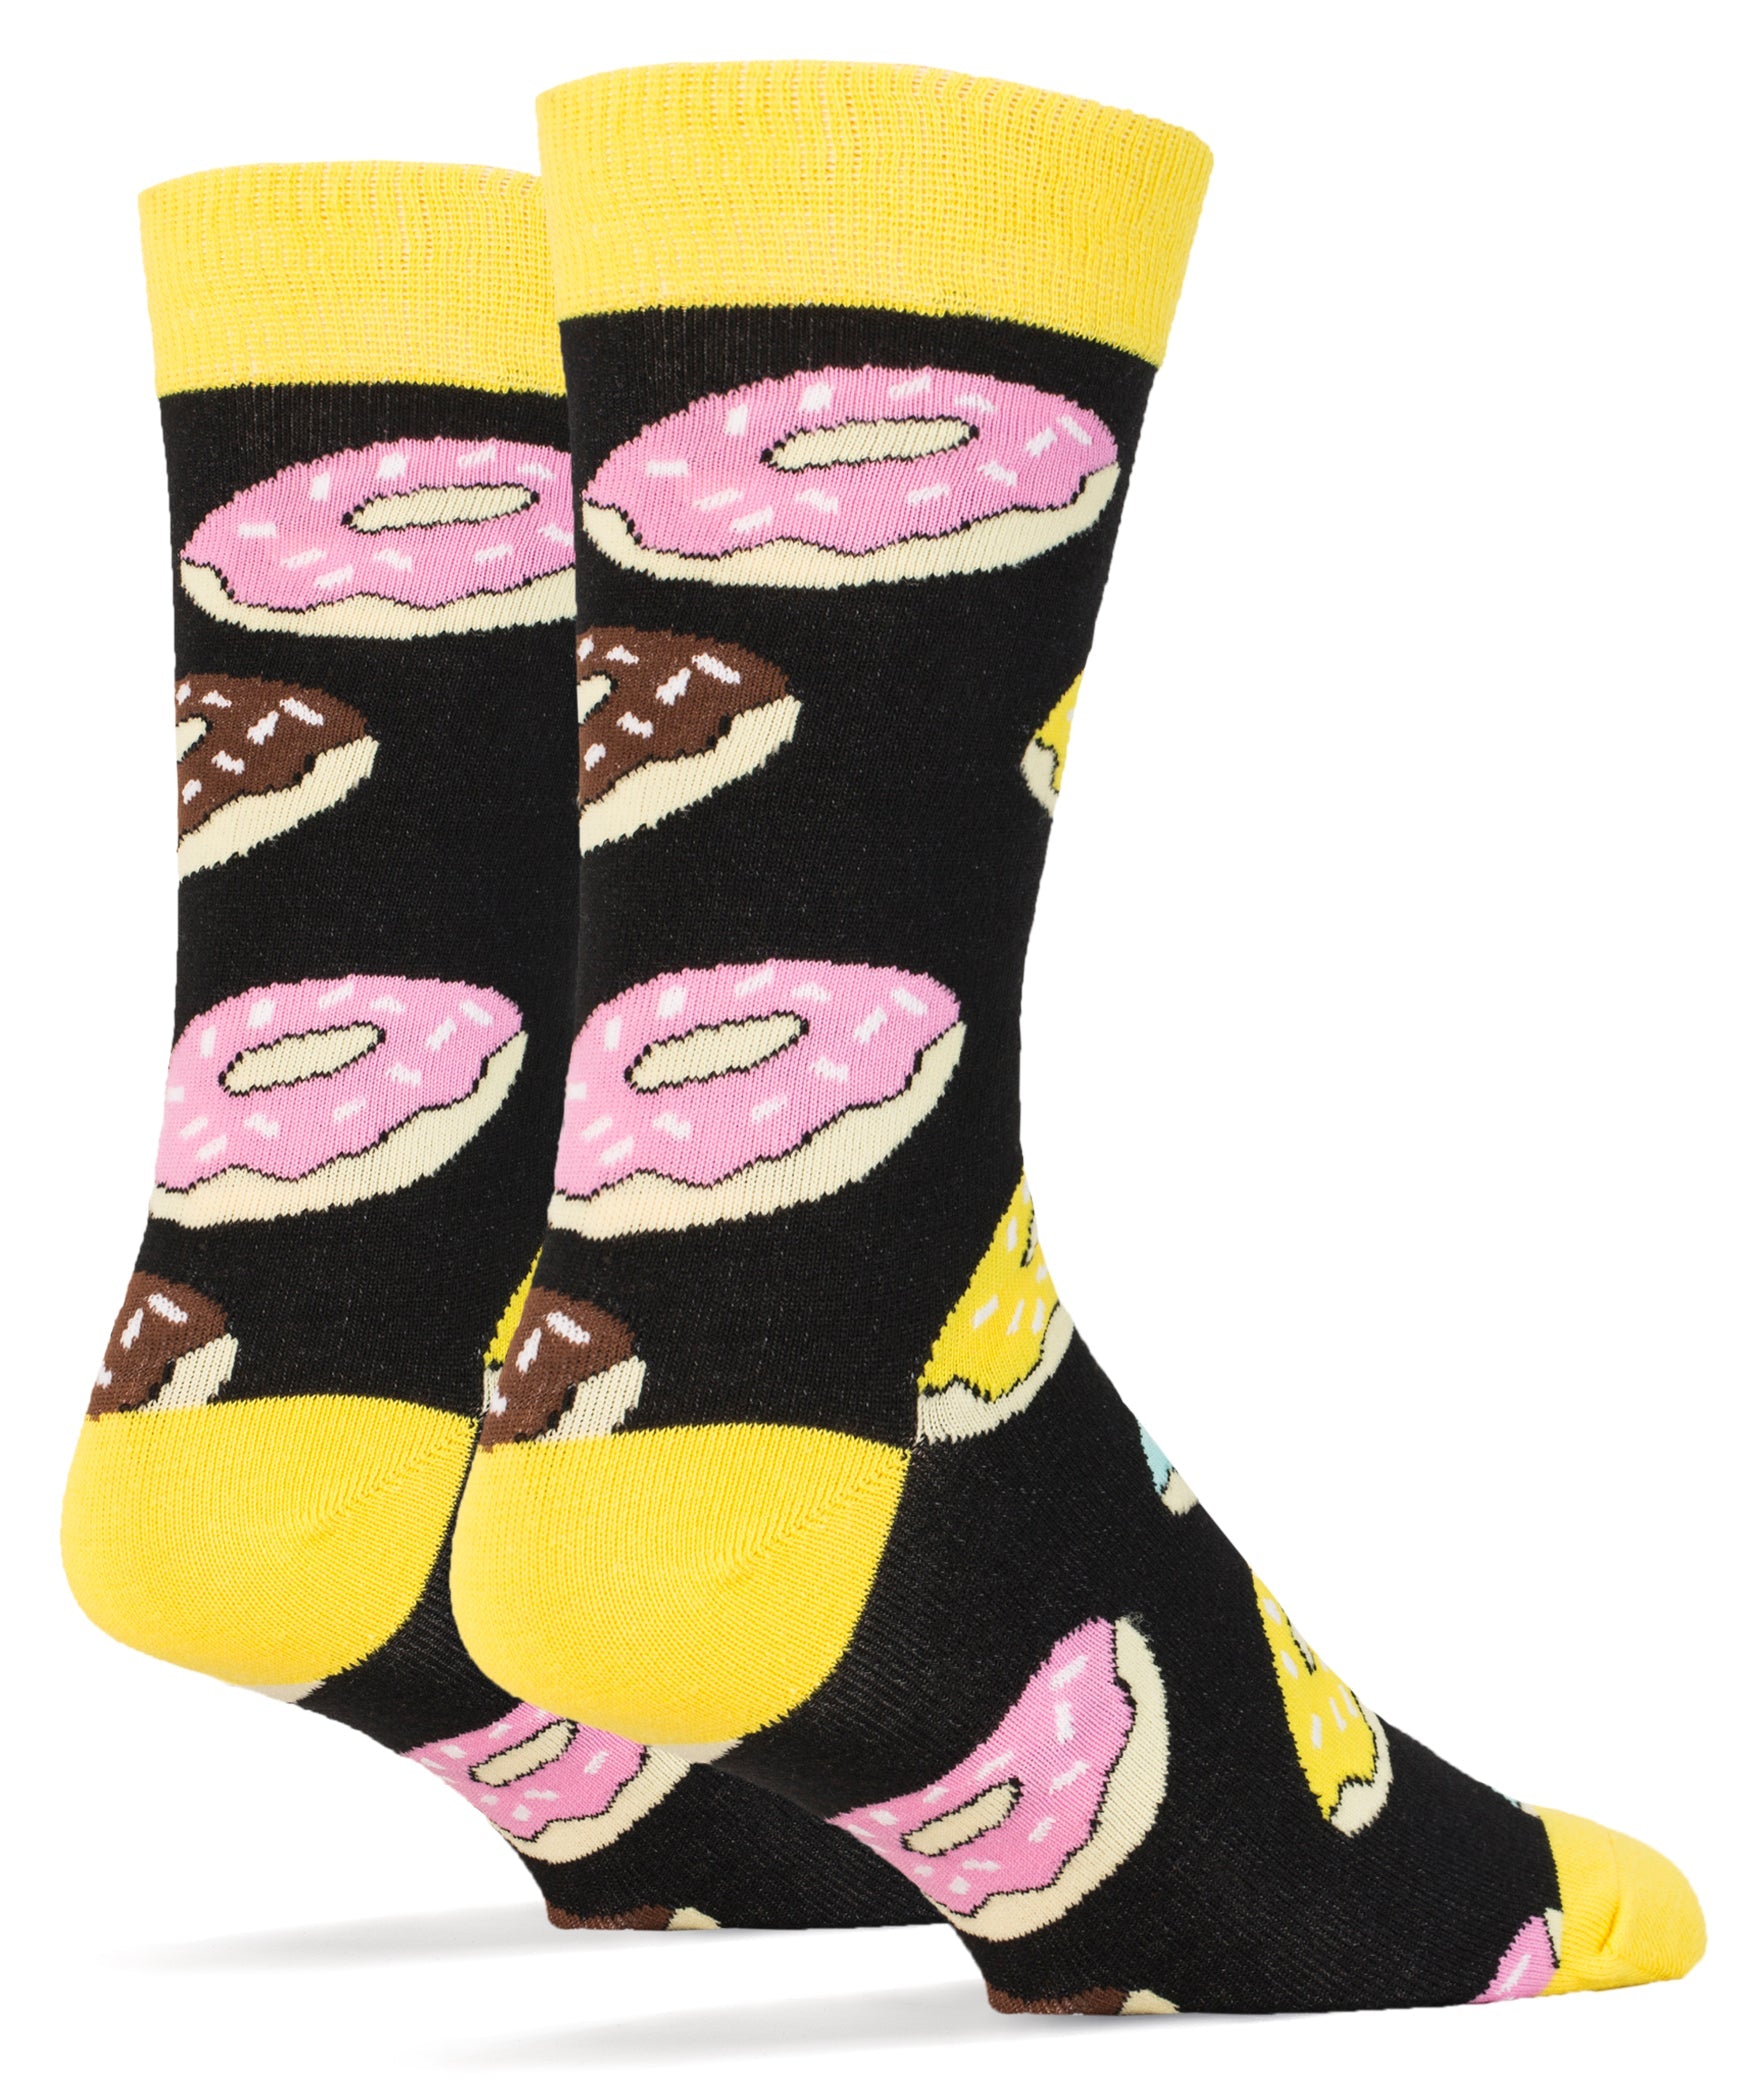 Donut Magic Athletic Socks, Fun Crew Socks For Men